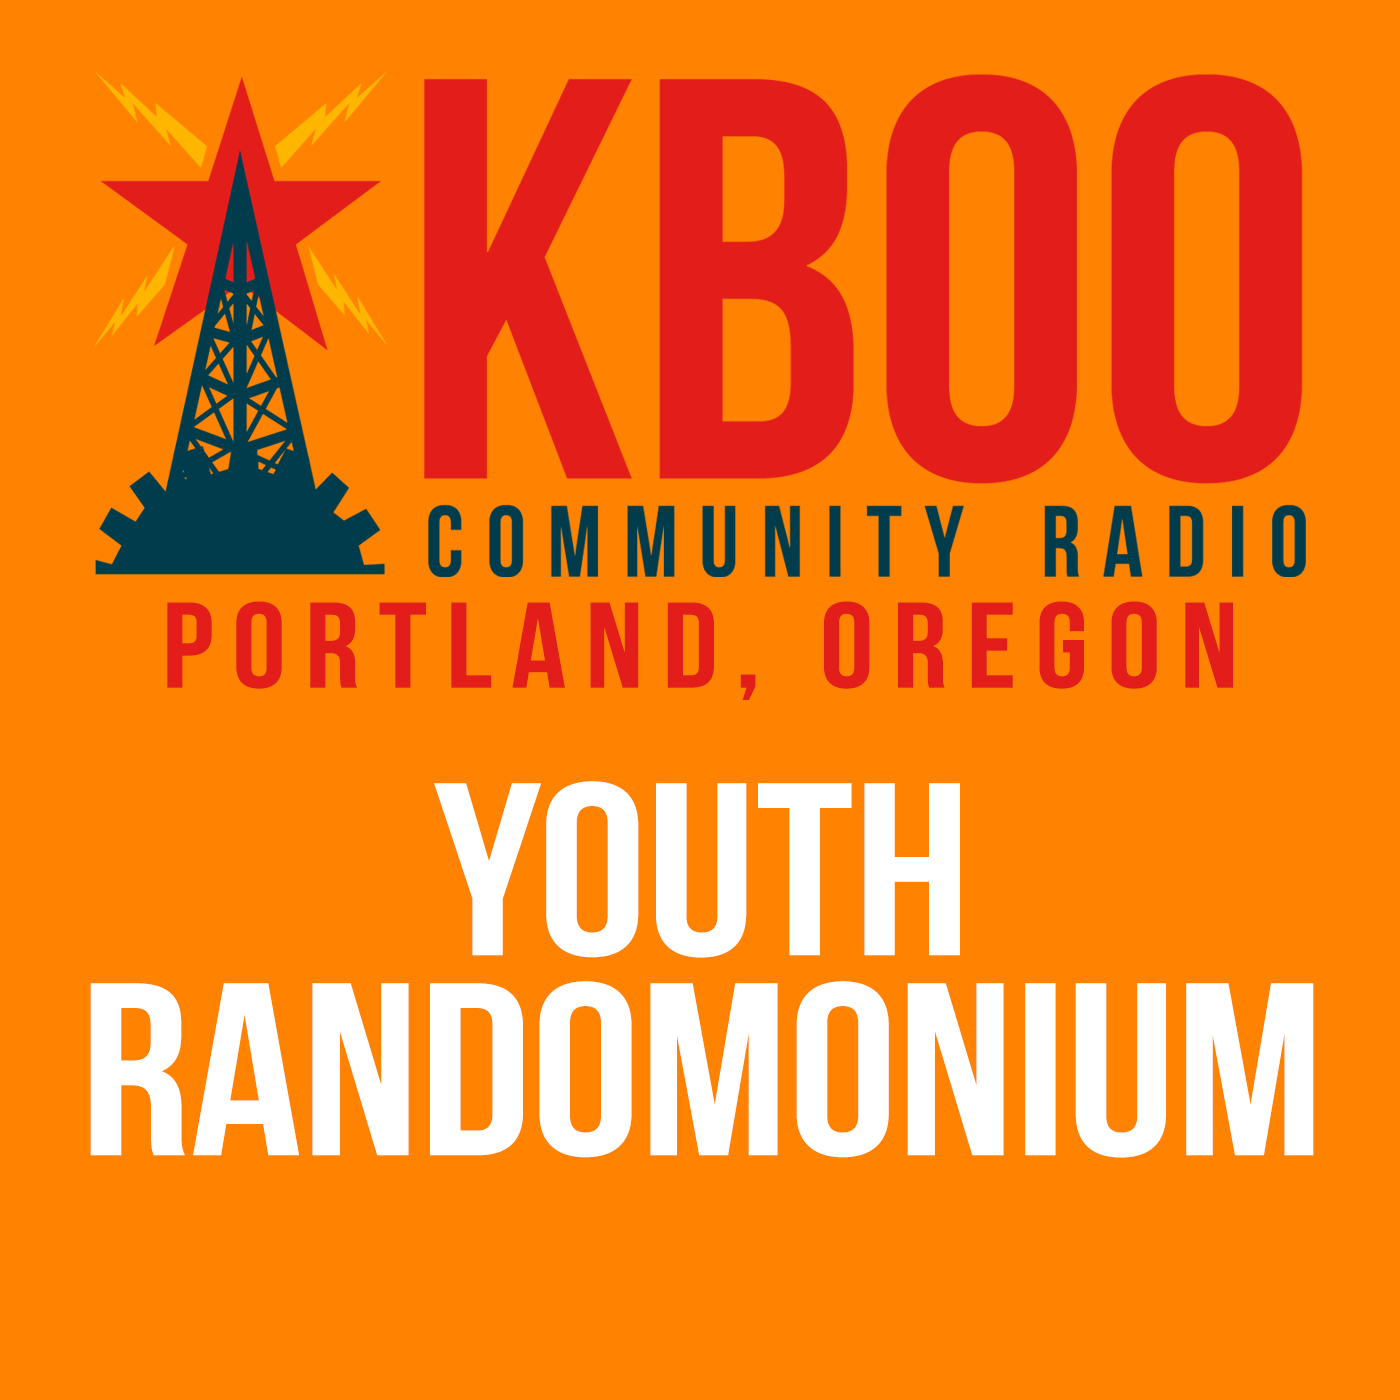 Youth Randomonium on 02/16/24